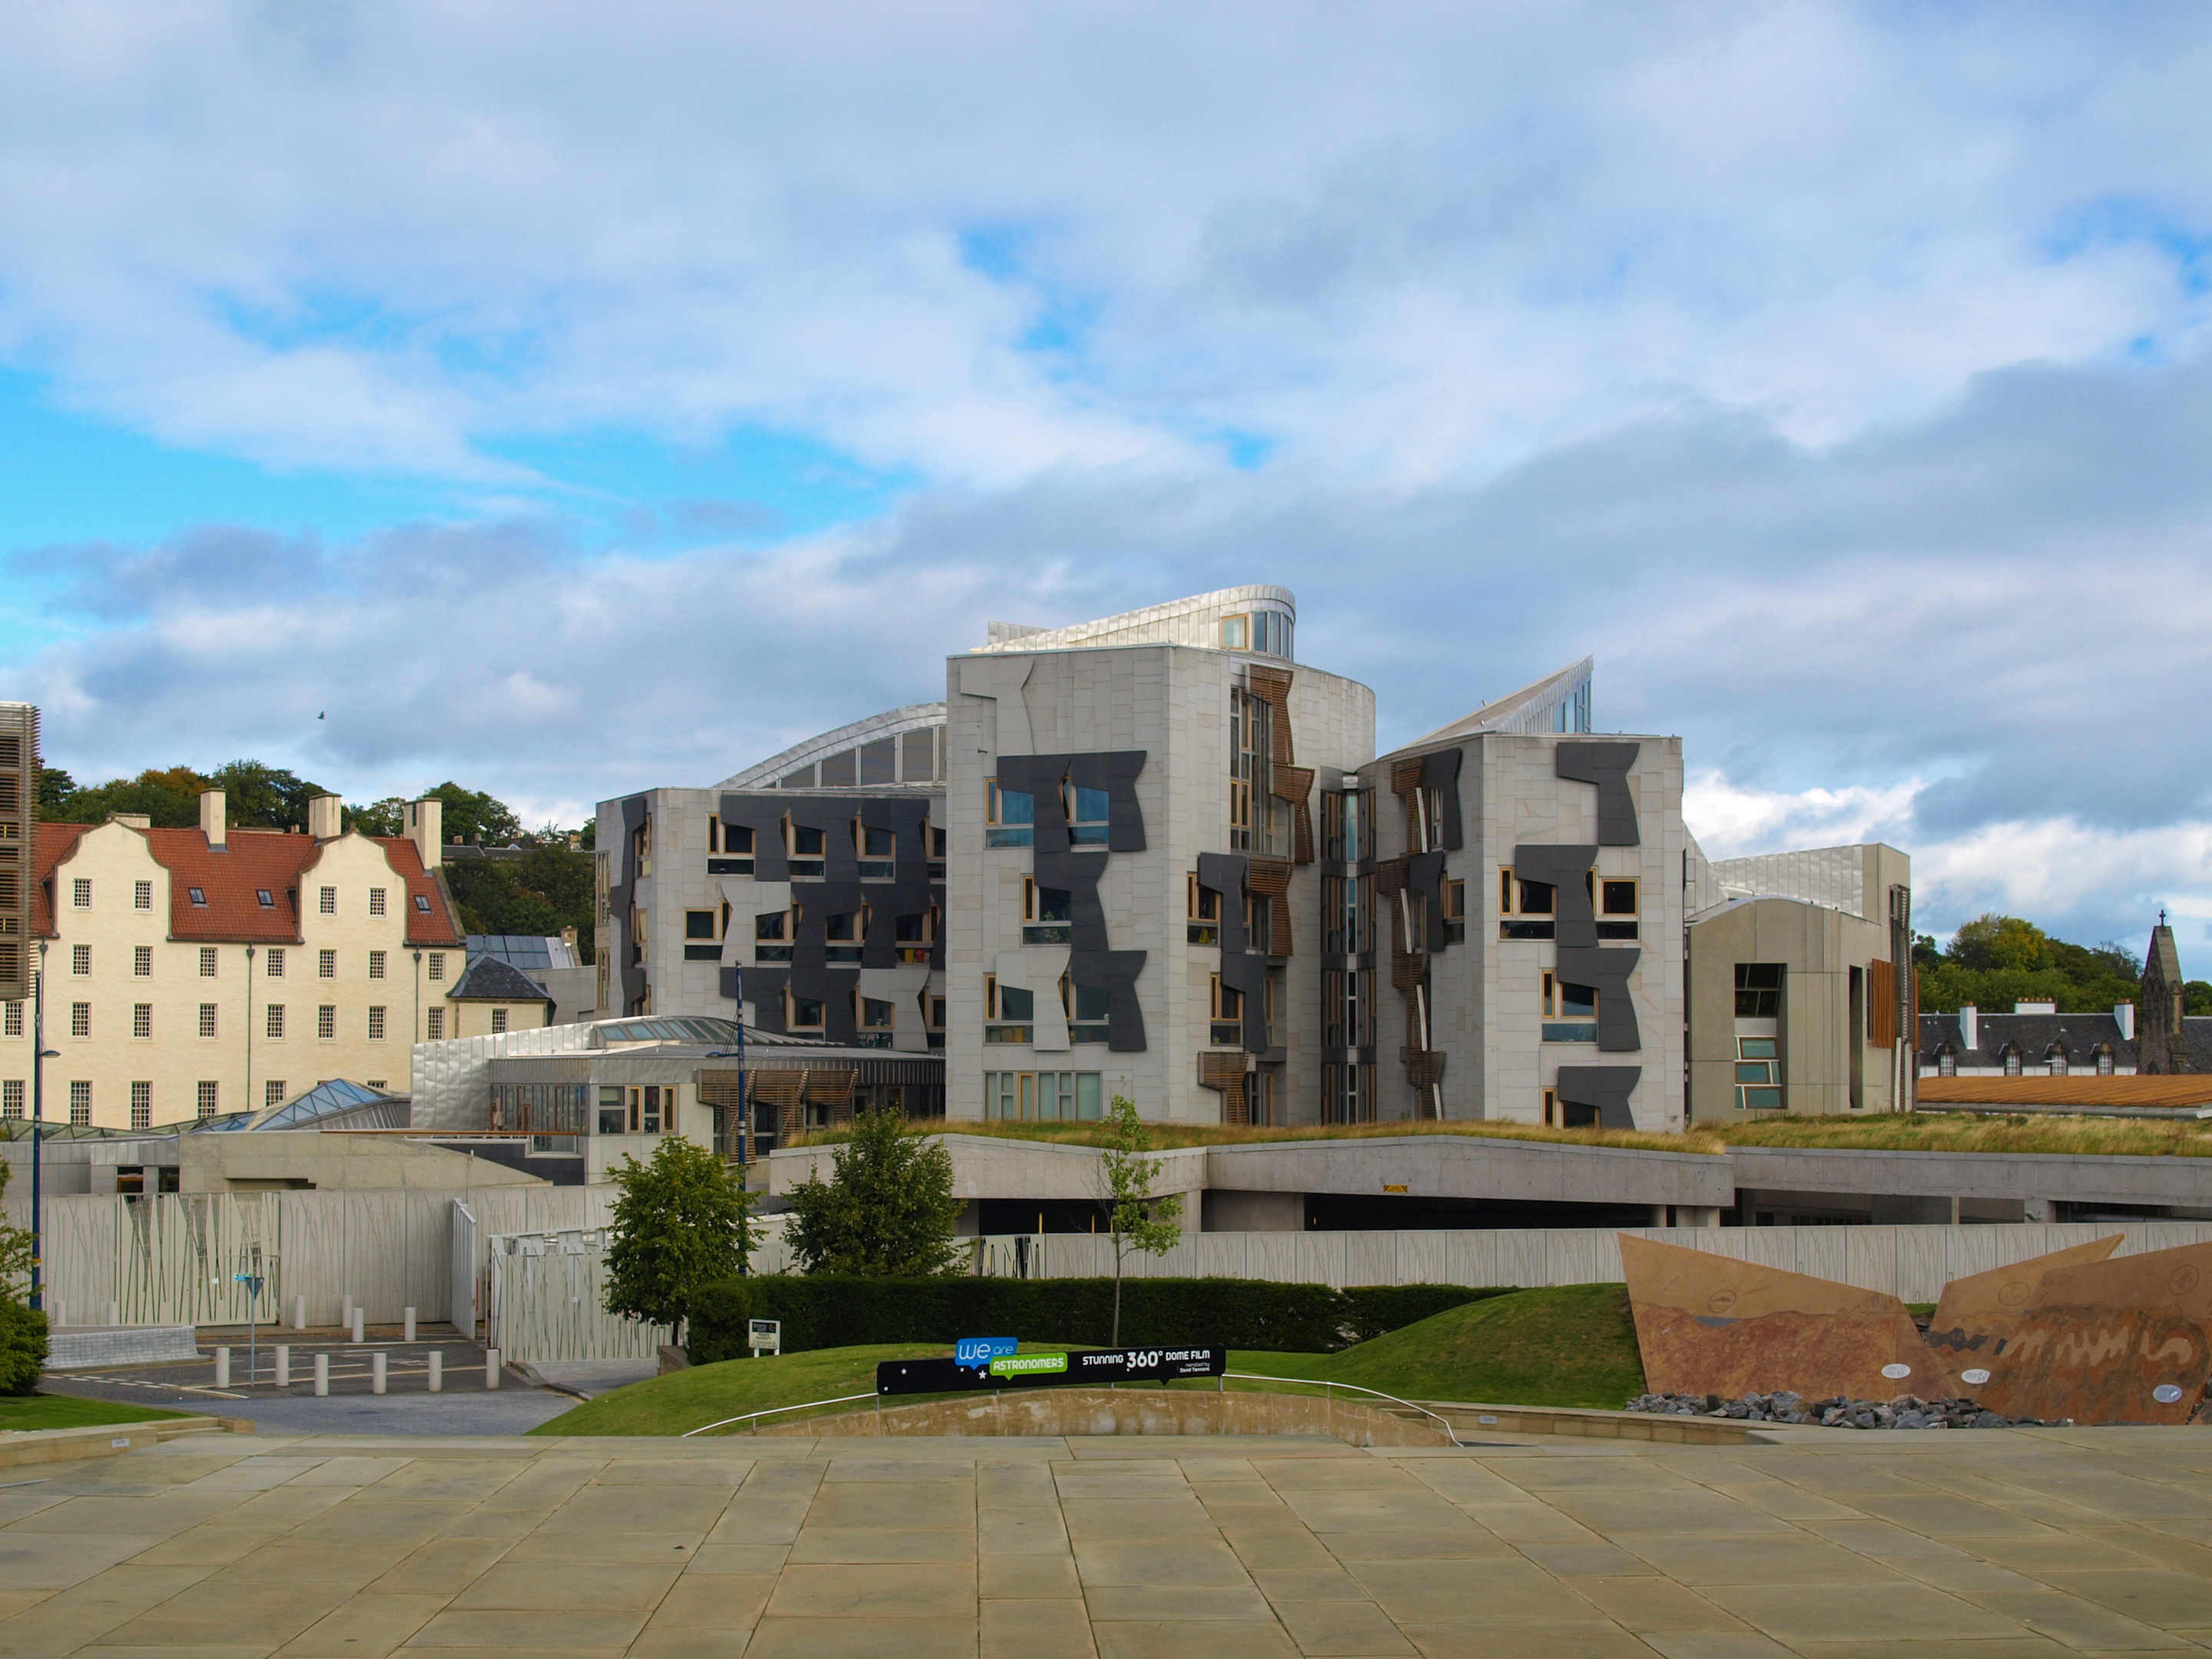 Scottish Parliament has been evacuated (iStock)